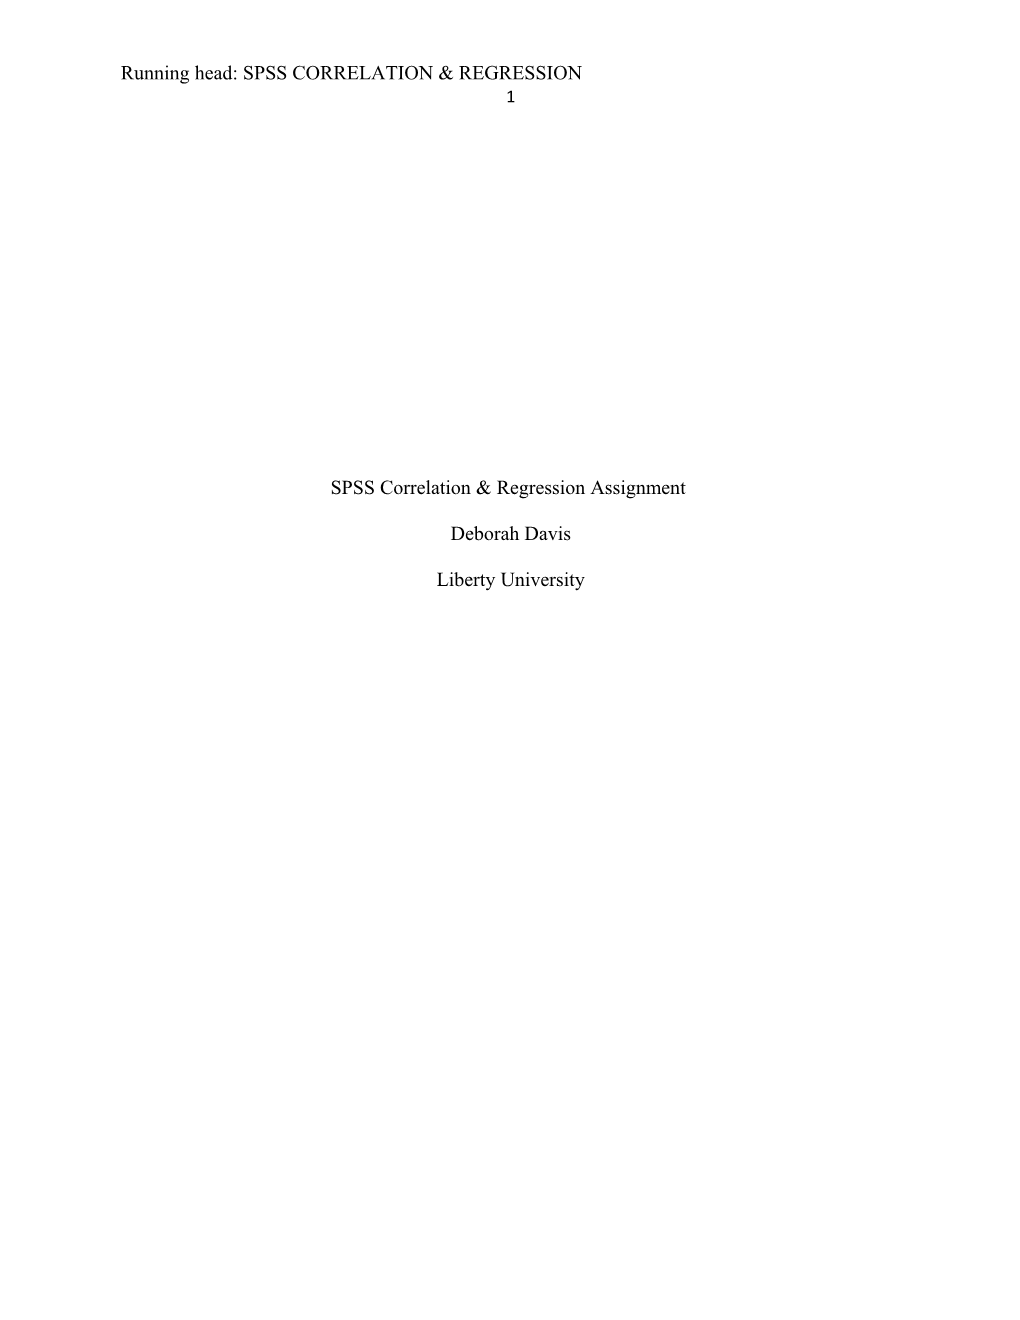 SPSS Correlation & Regression Assignment